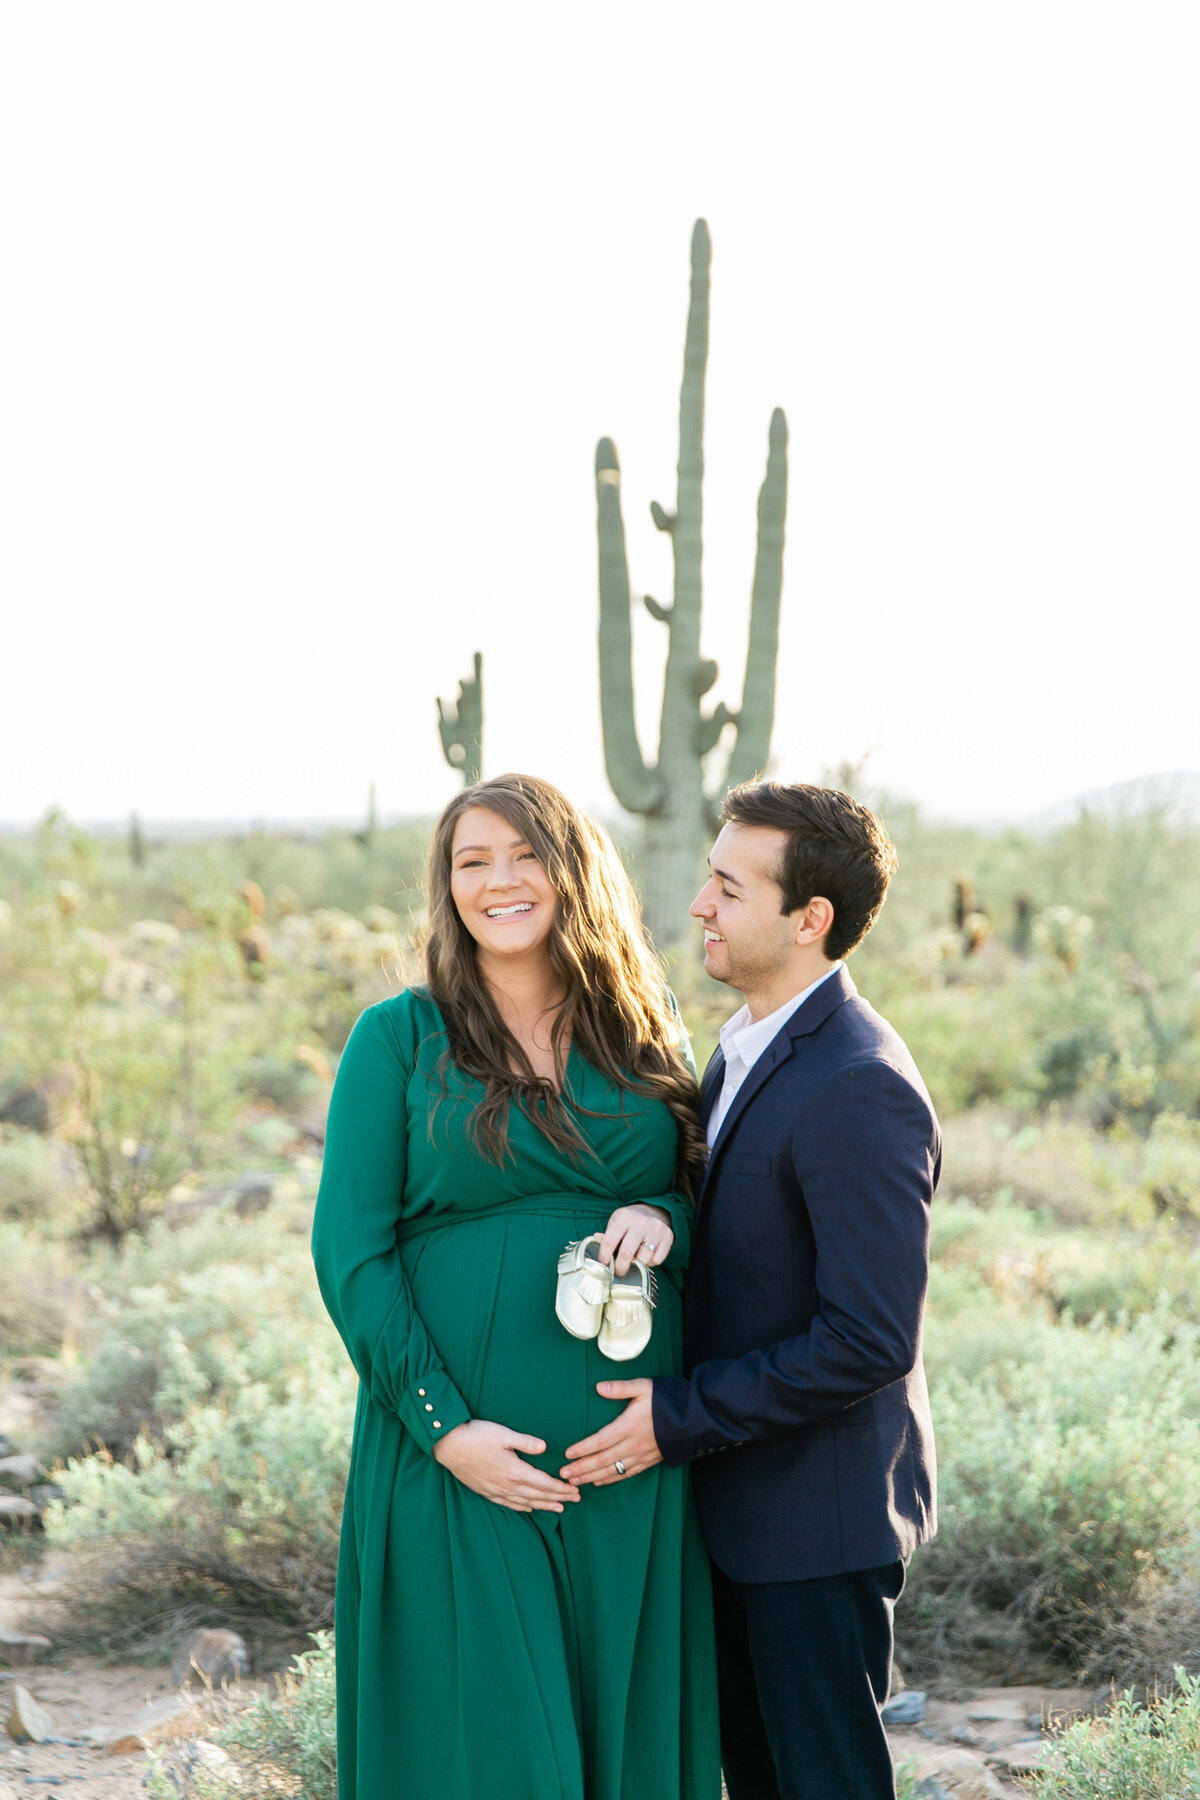 Karlie Colleen Photography - Scottsdale Arizona - Maternity Photos - Shelby & Cris-28